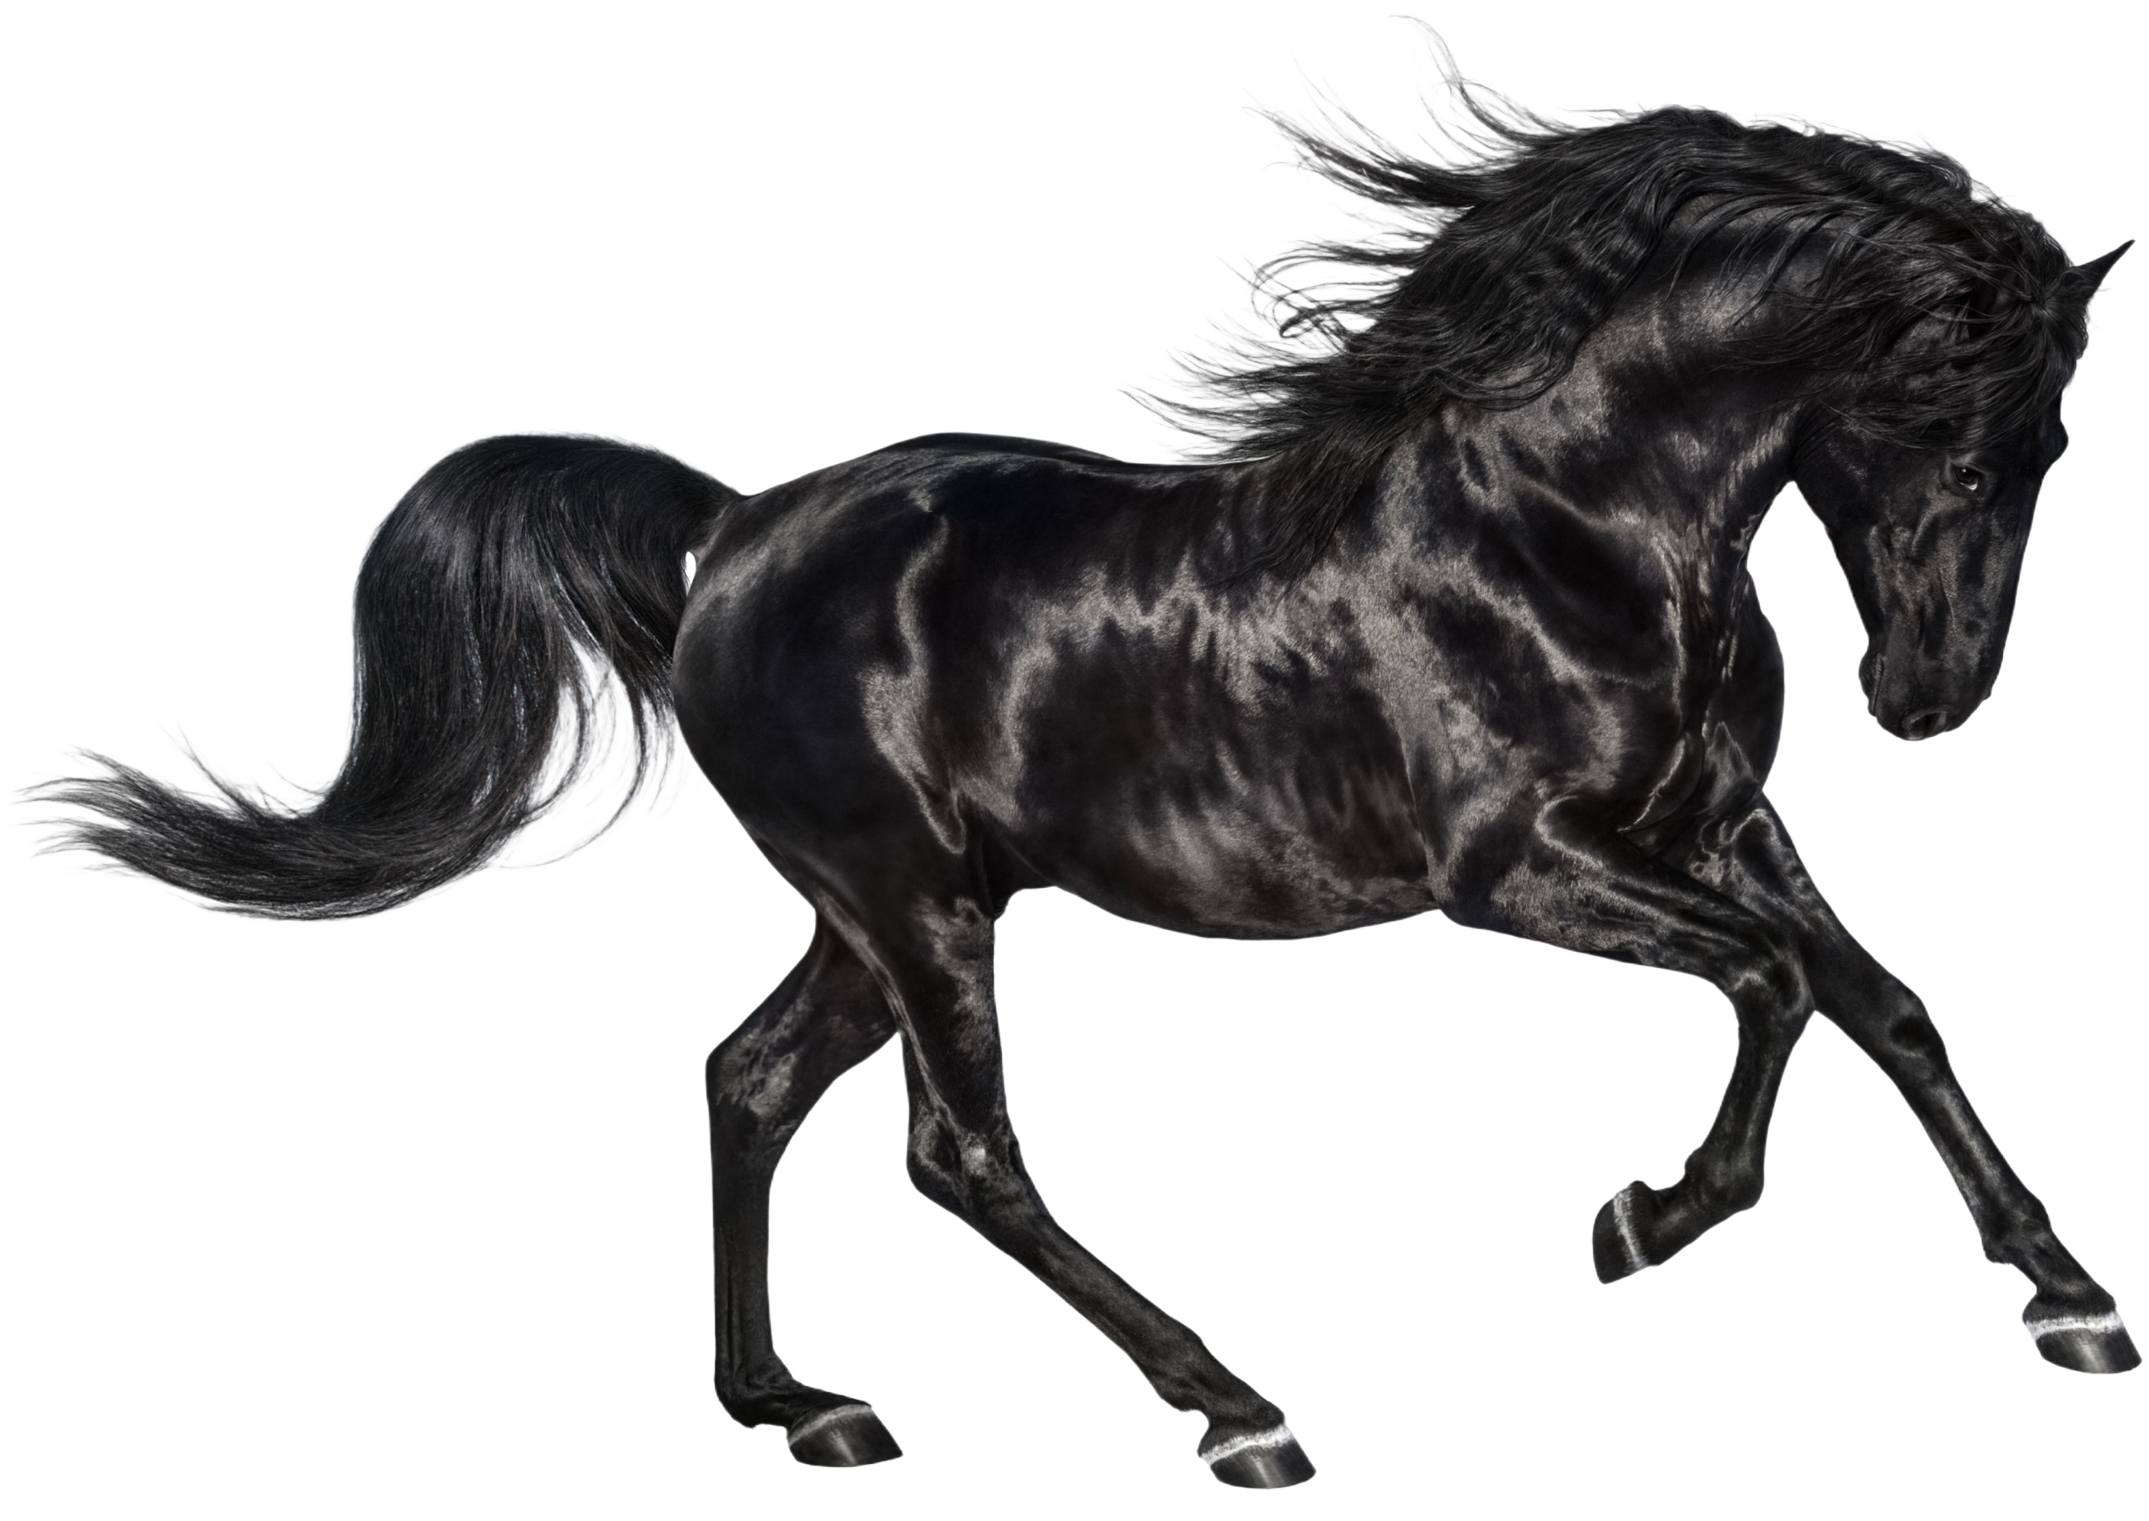 Black horse trotting